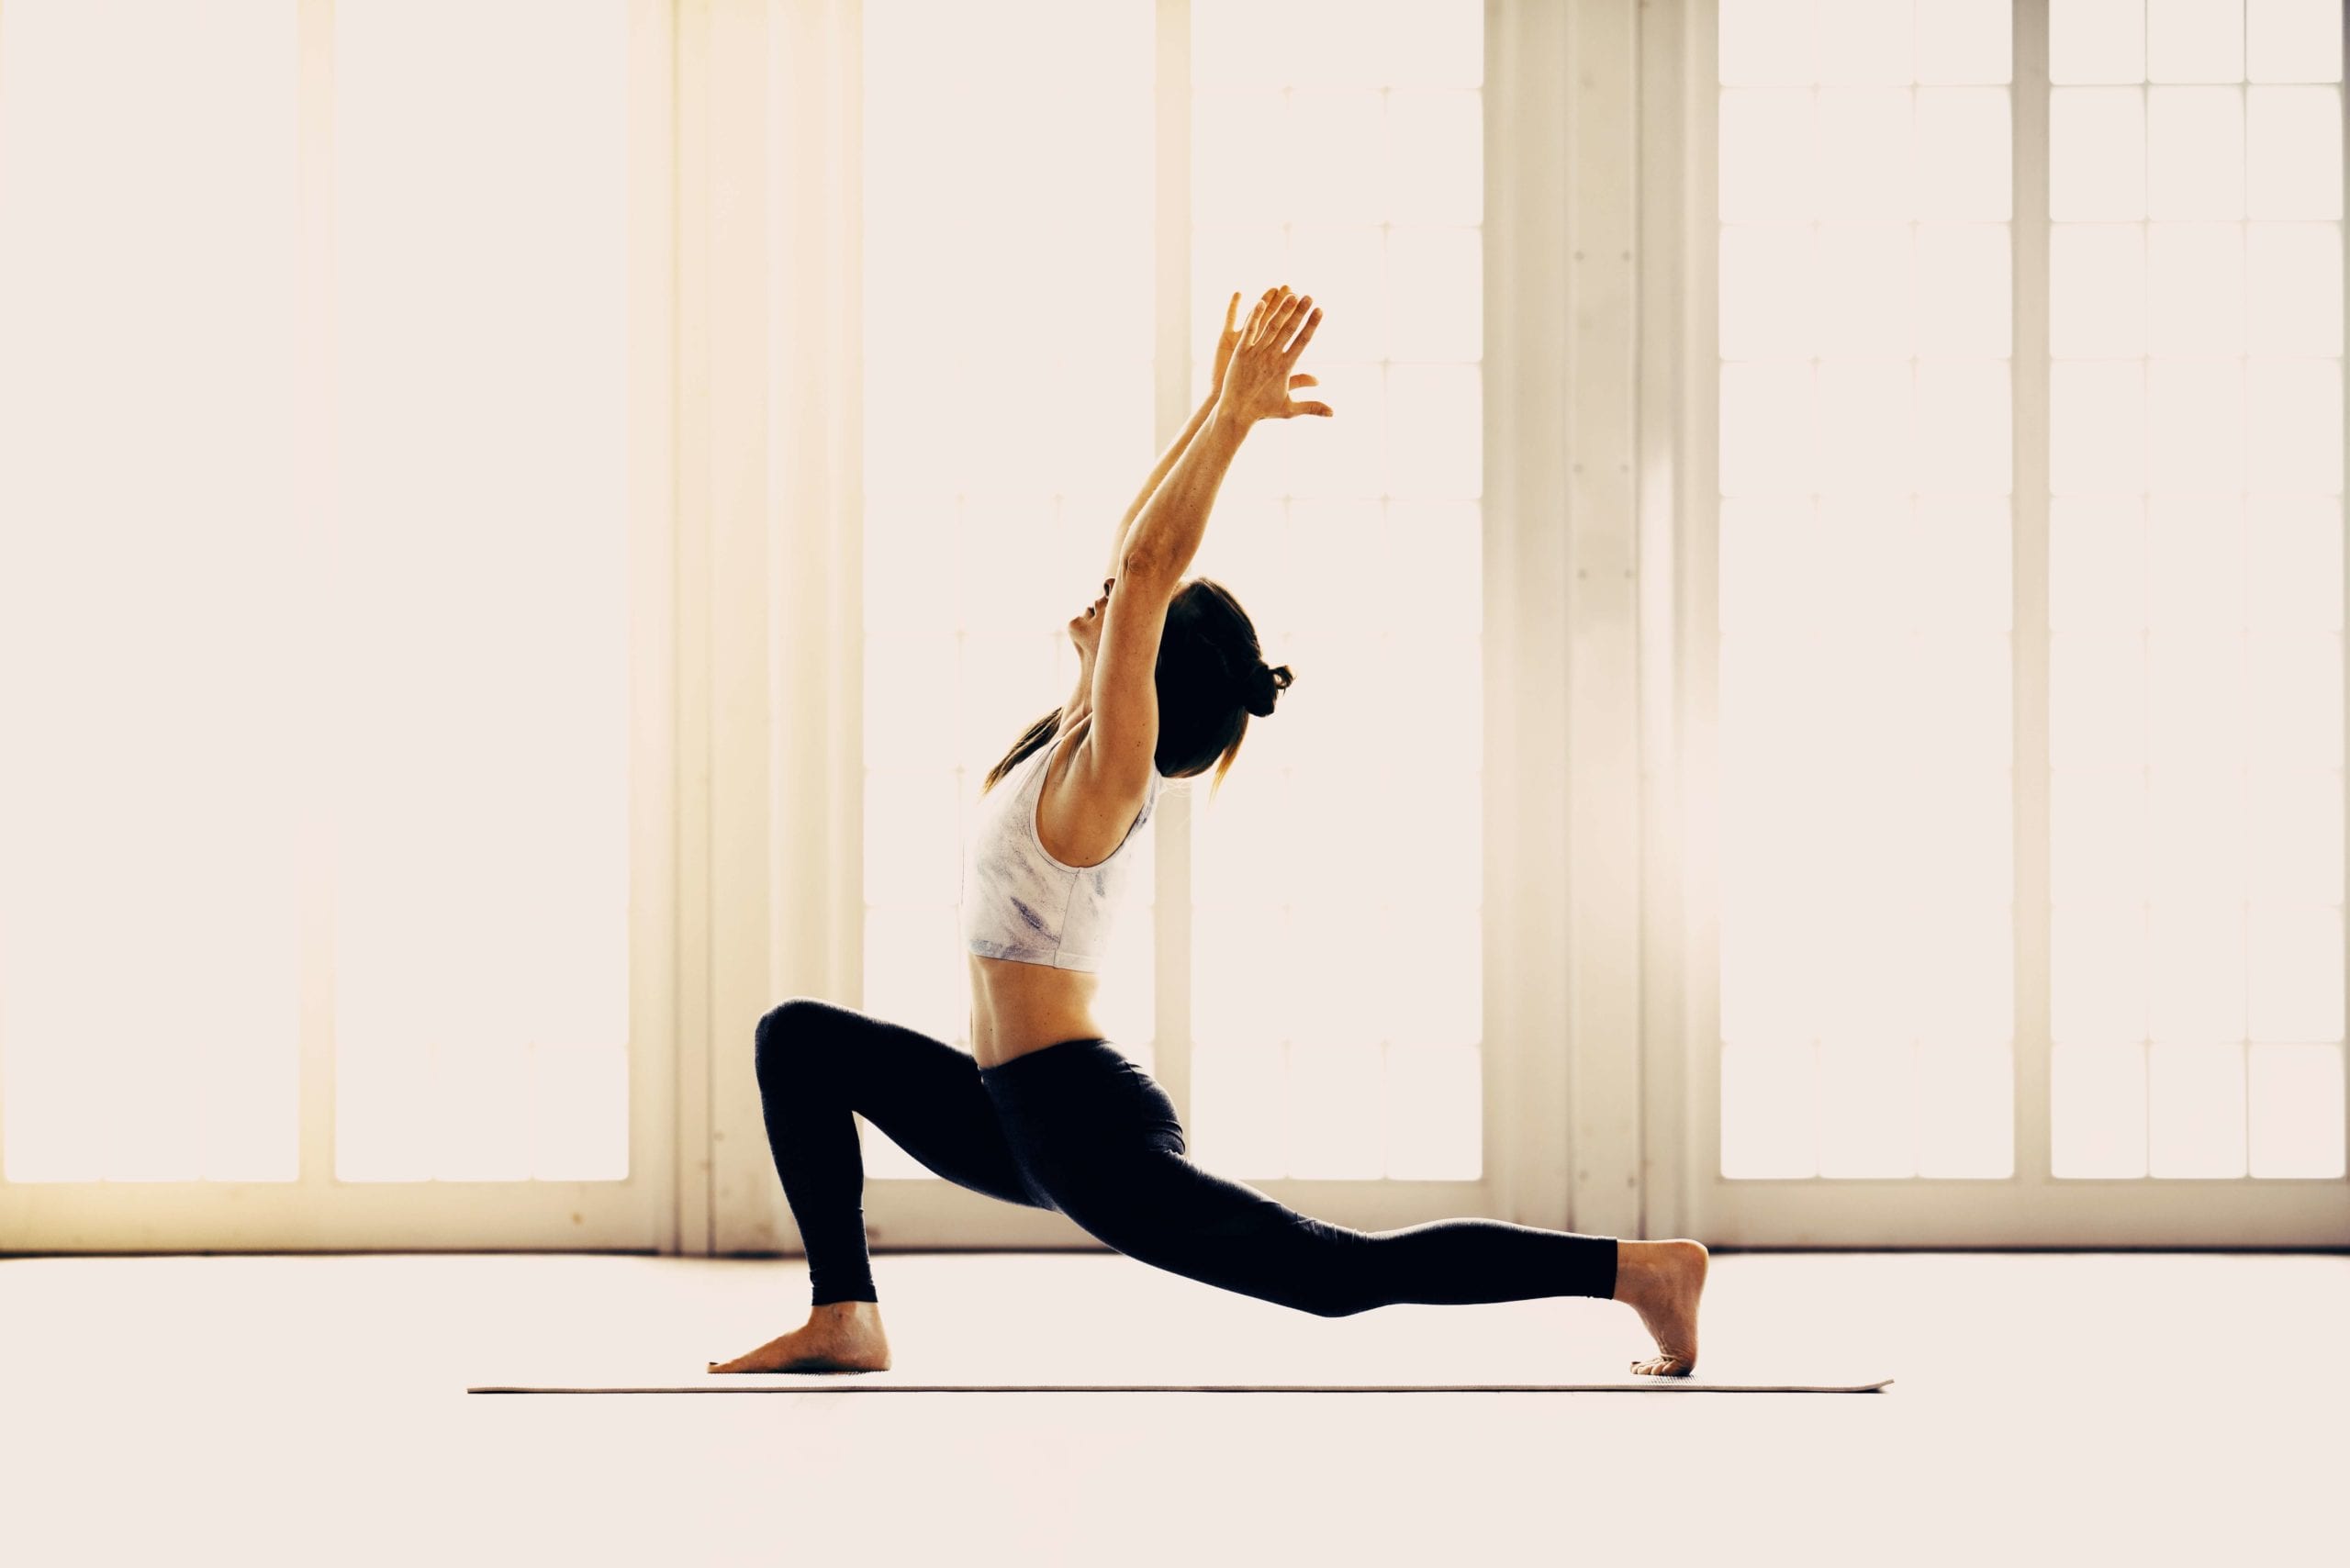 Meike Spitko Yoga Krieger